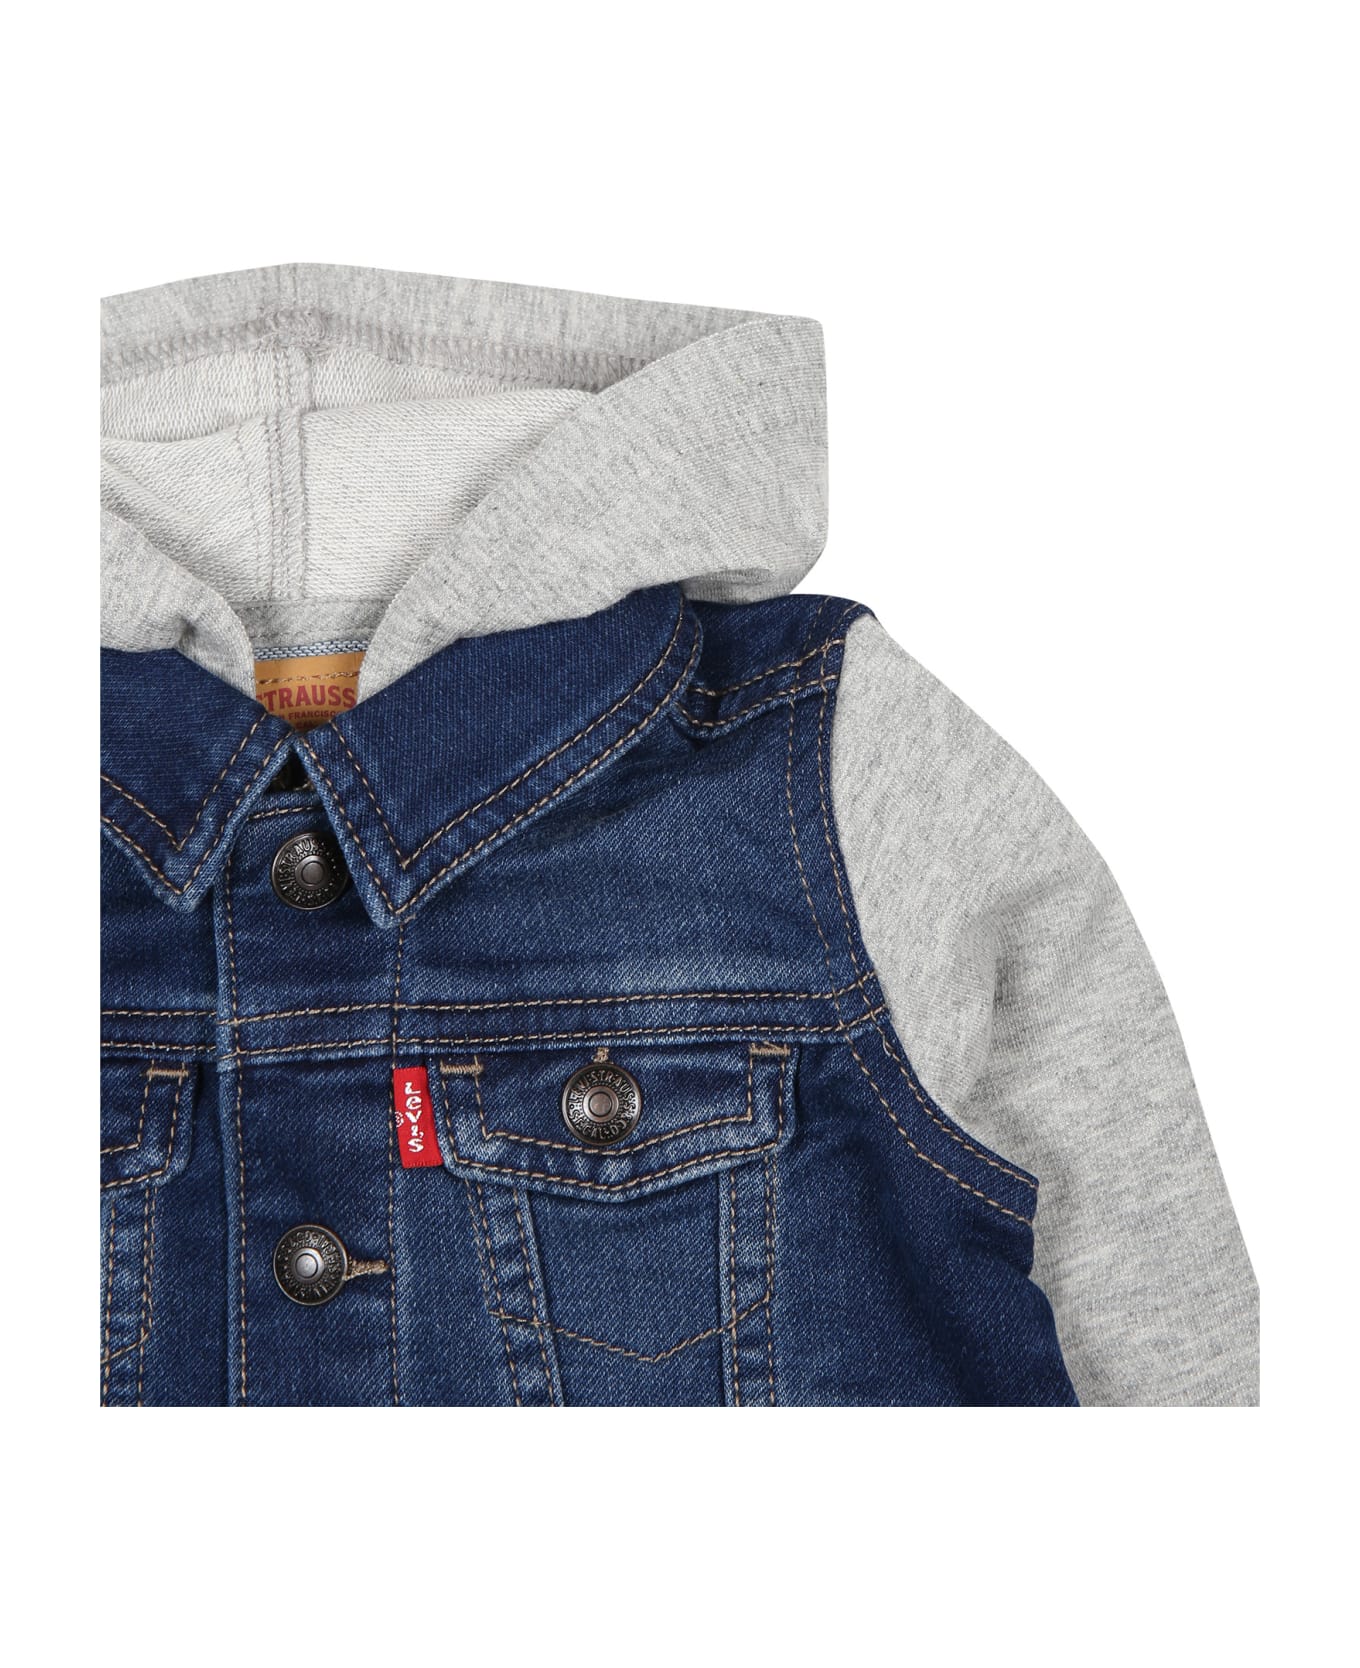 Levi's Denim Jacket For Baby Boy - Denim